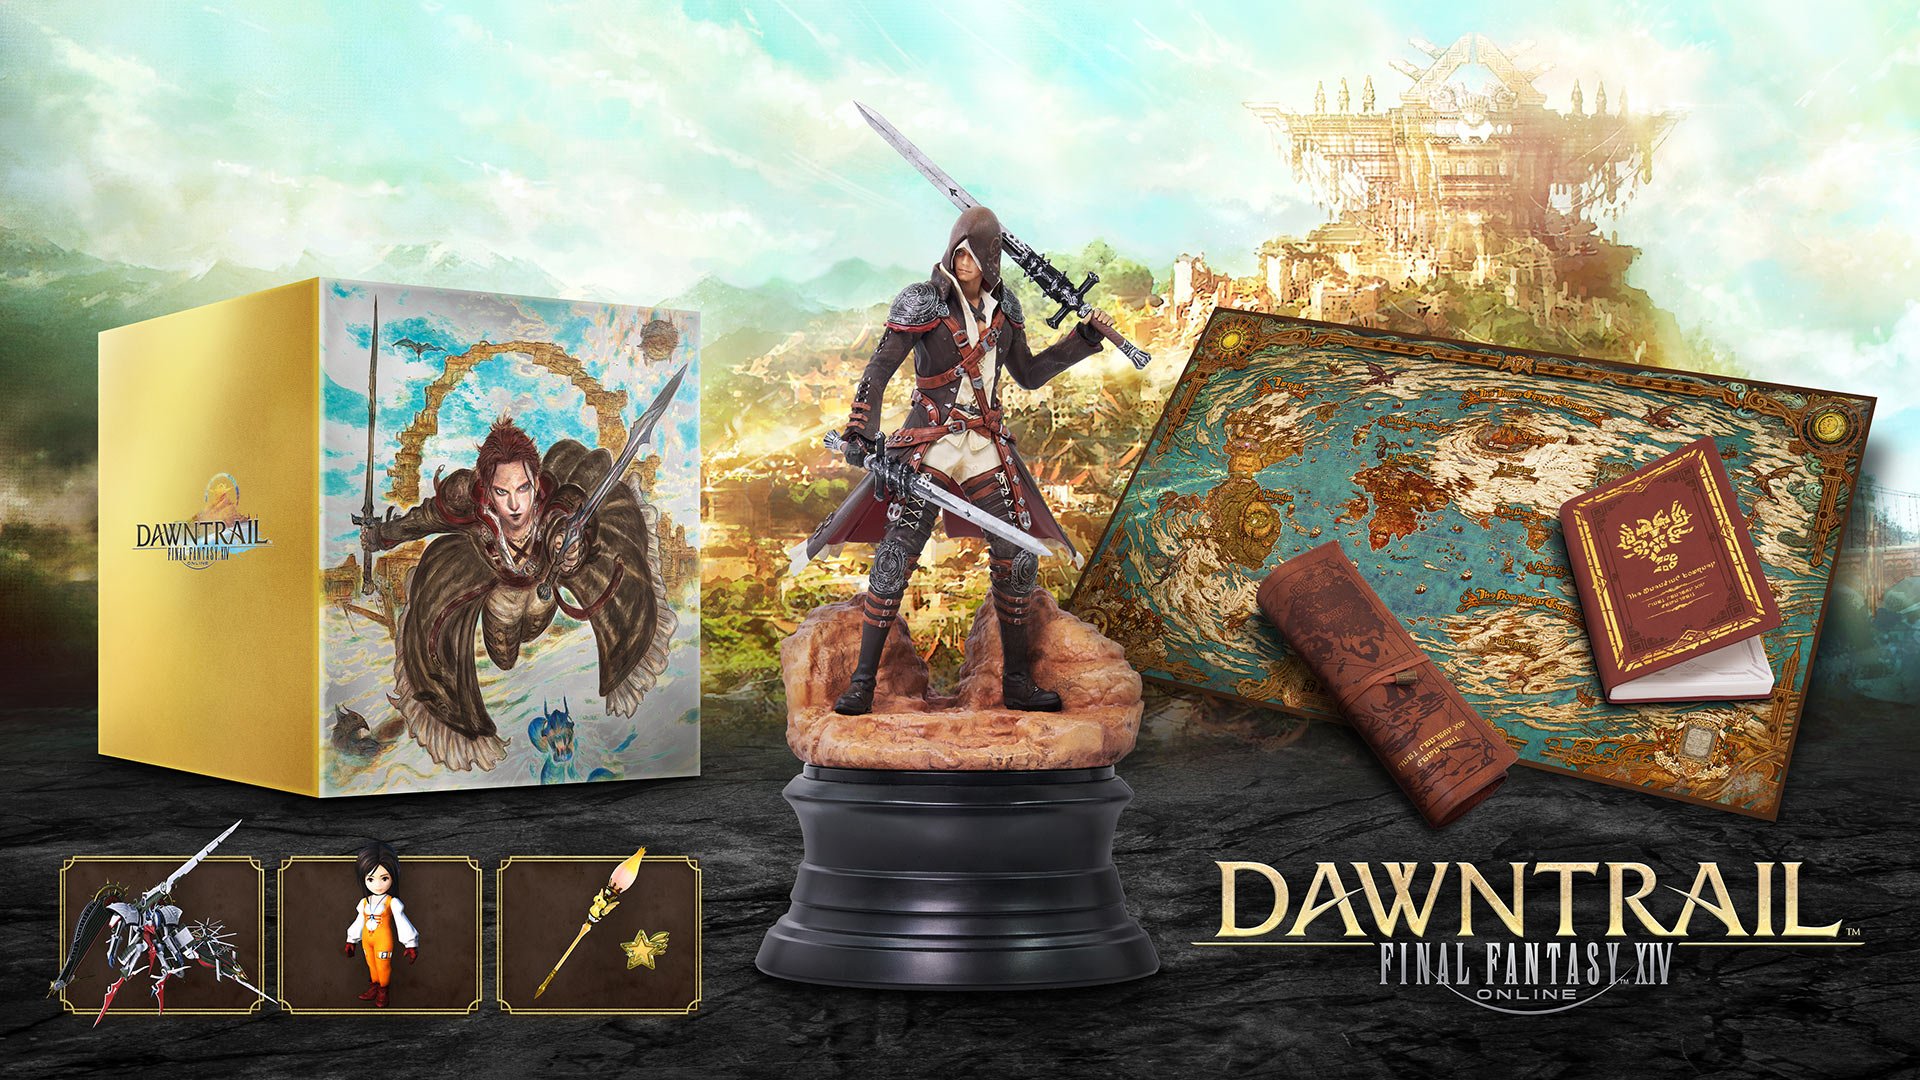 Final Fantasy XIV Dawntrail Collectors Box Image